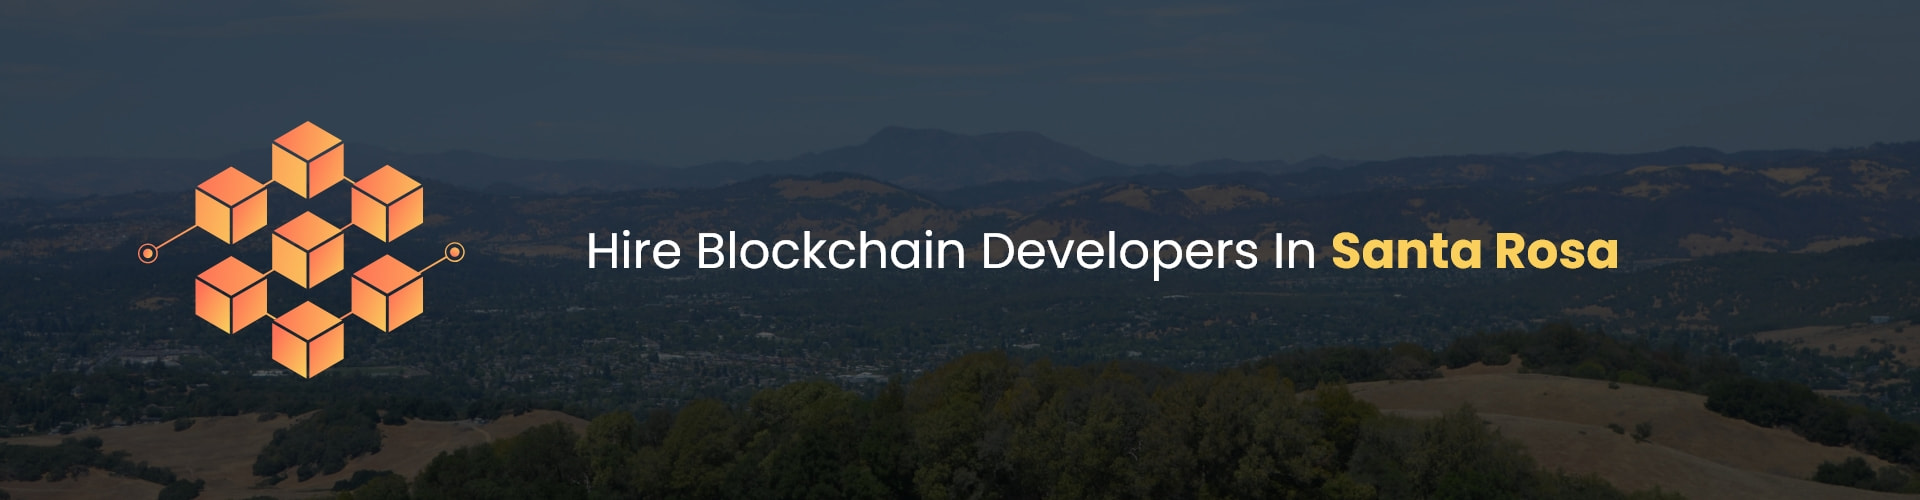 hire blockchain developers in santa rosa